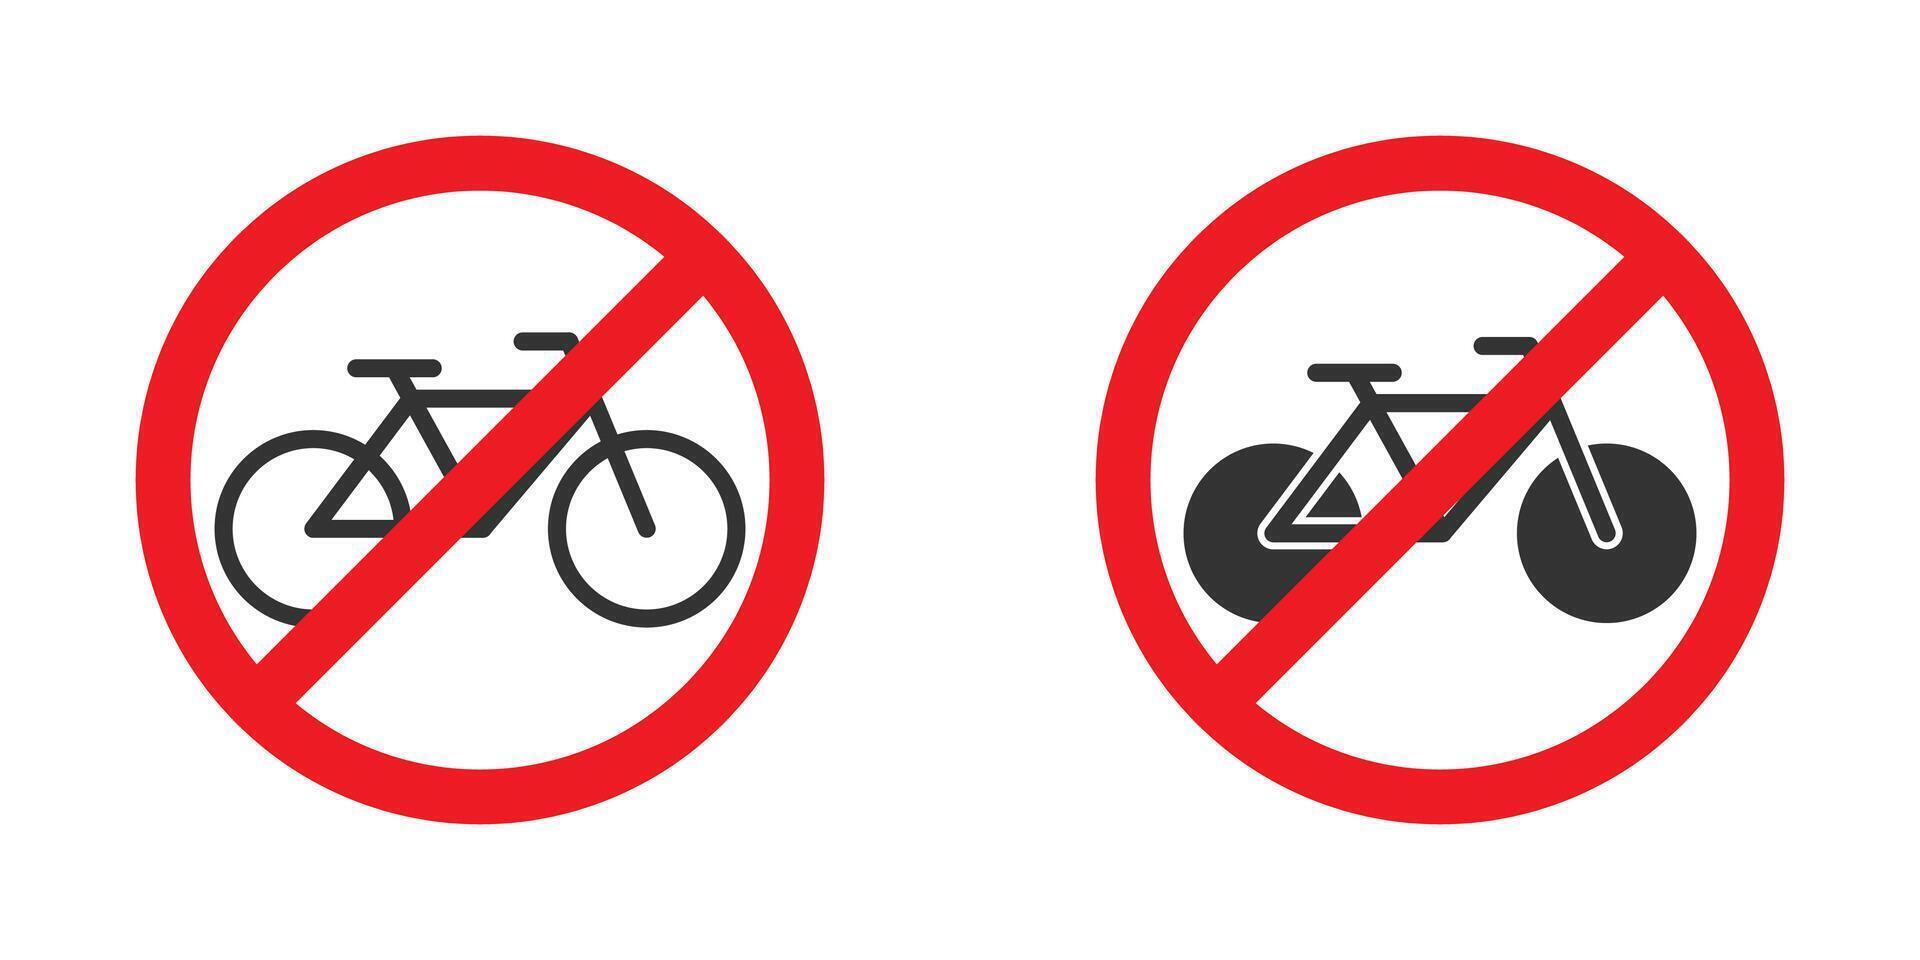 bicicleta prohibido icono. No bicicleta signo. vector ilustración.